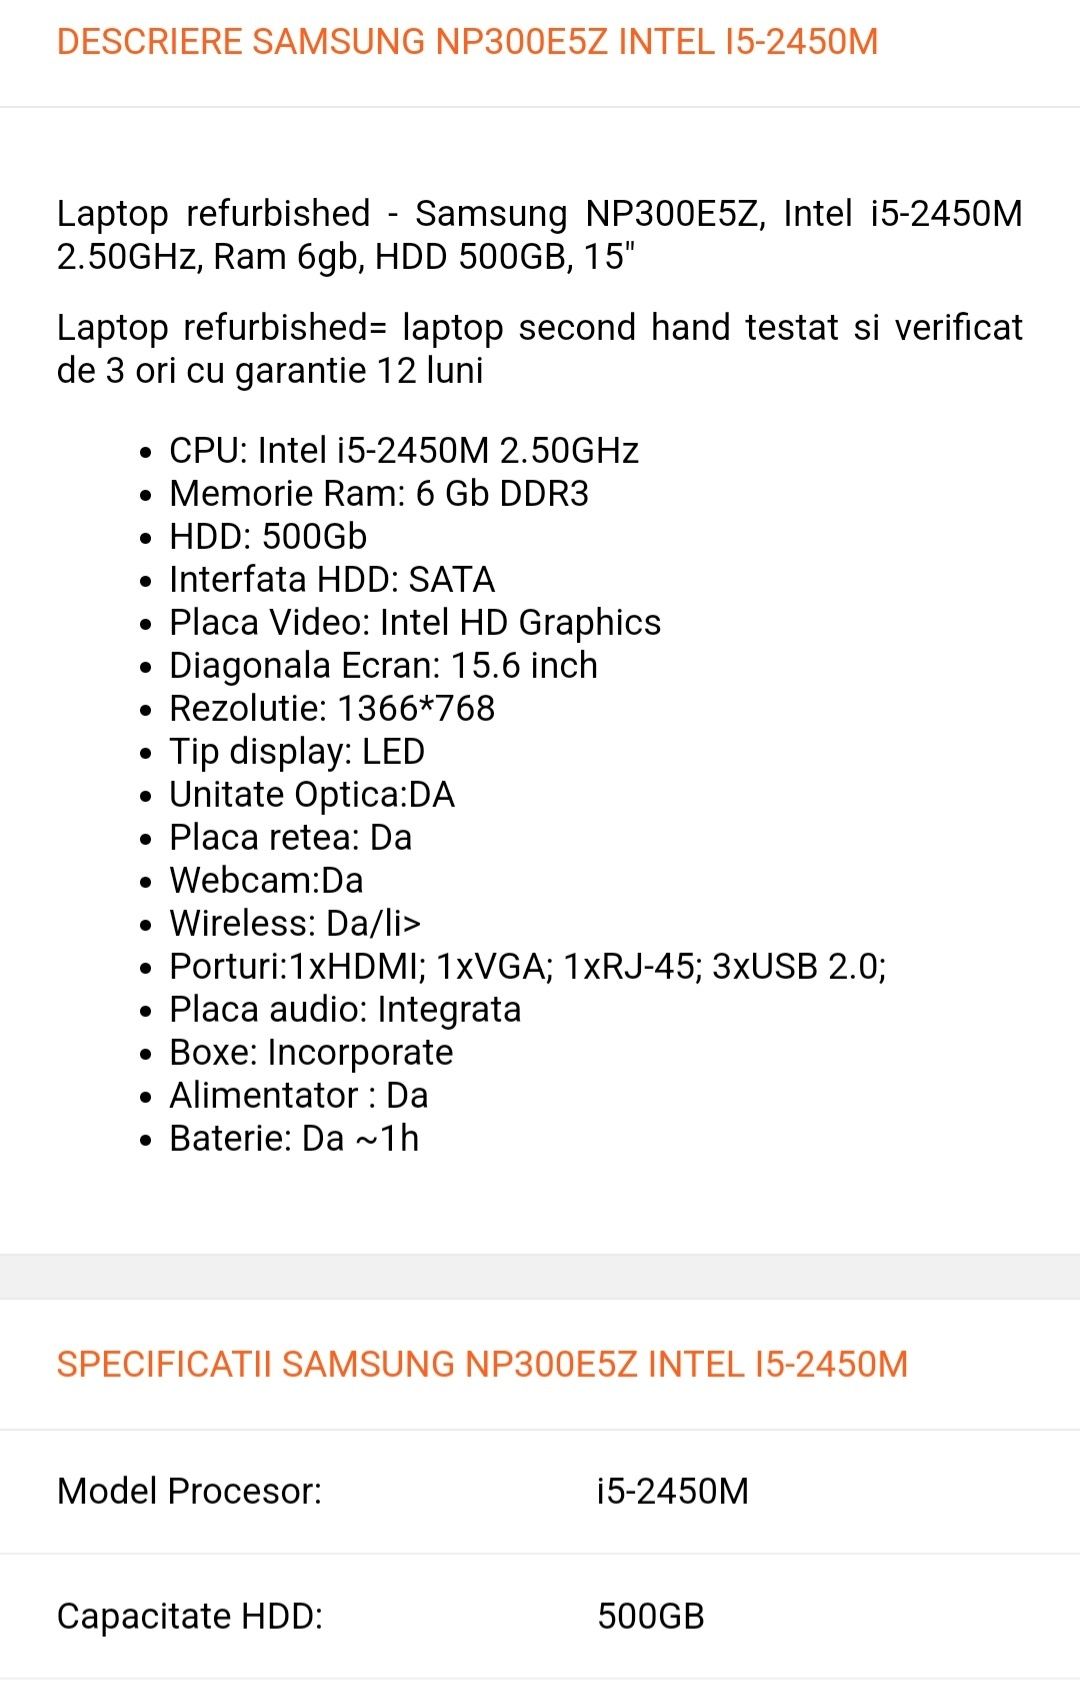 Laptop Samsung 300E 15,6 inch